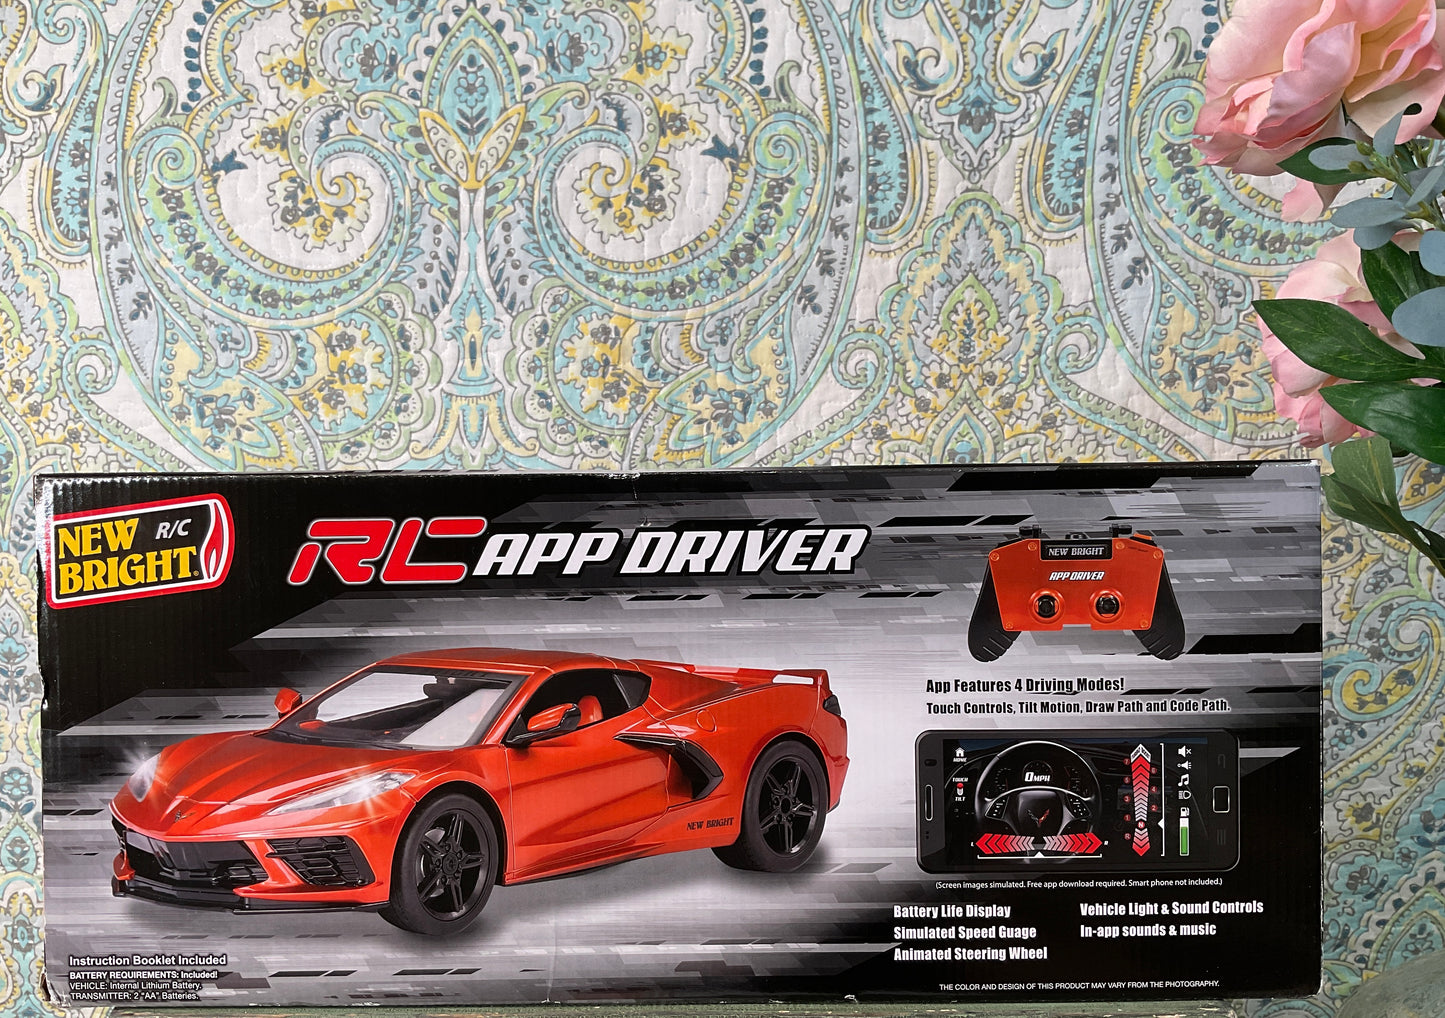 NEW Bright R/C 2020 Corvette Electronic Car 1:14 Toy